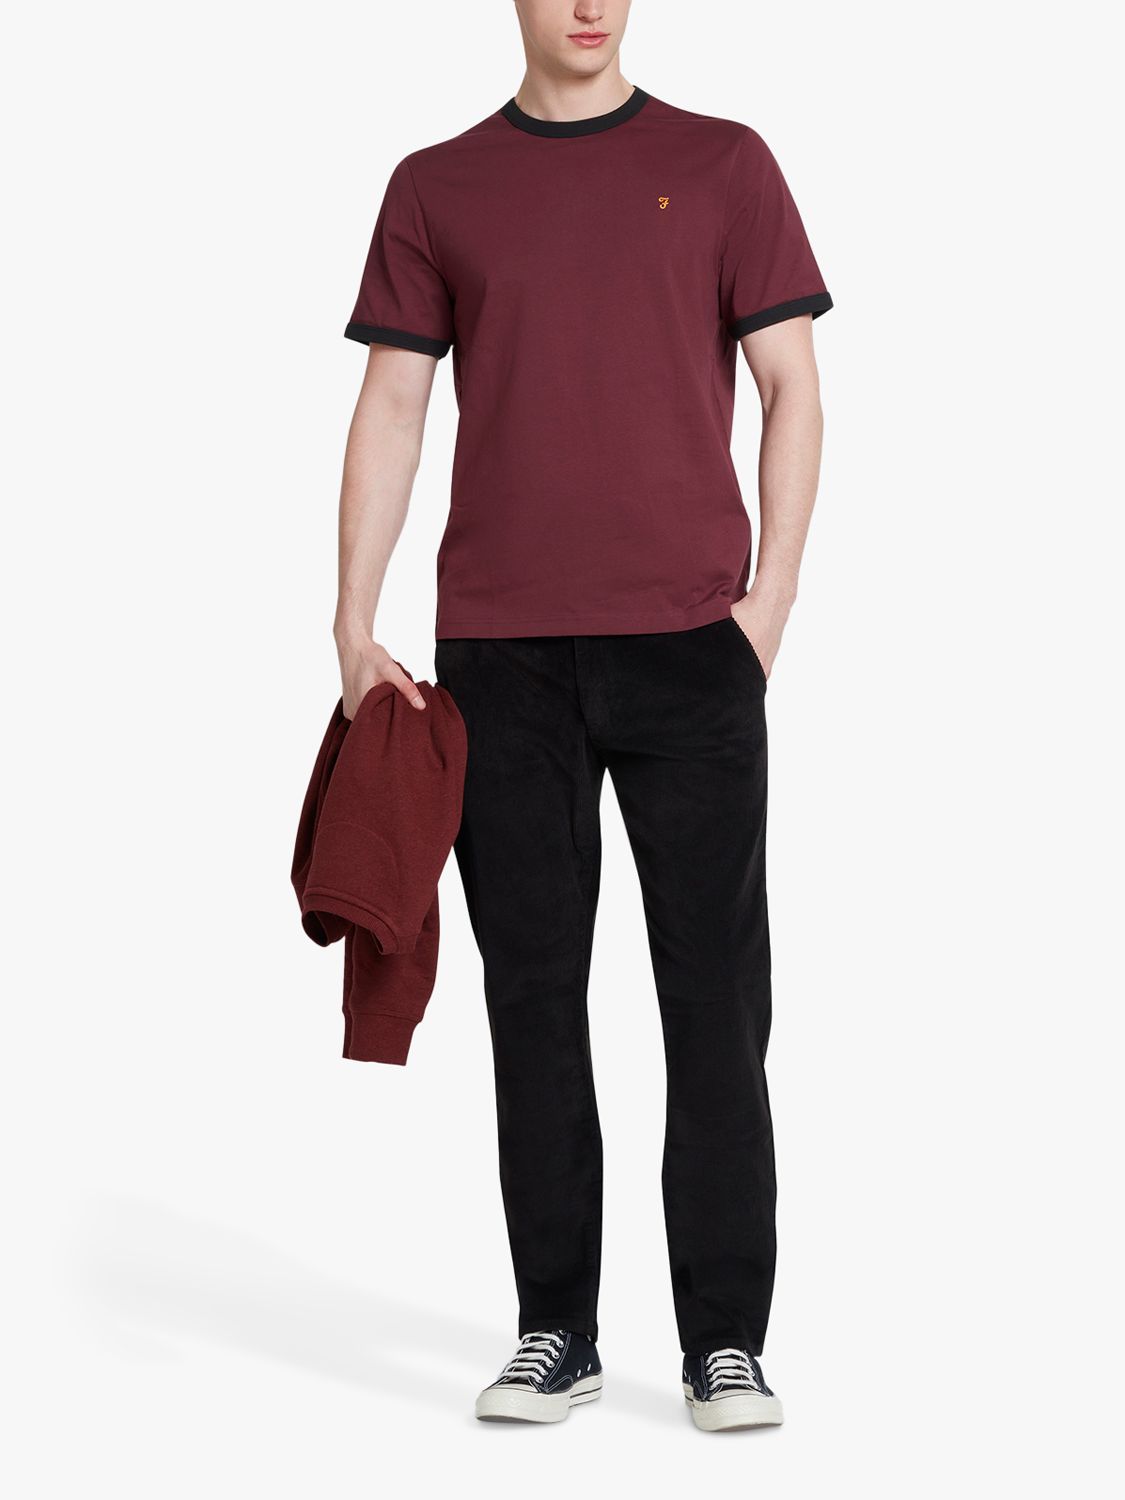 Farah Groves Ringer Short Sleeve T-Shirt, Farah Red, L